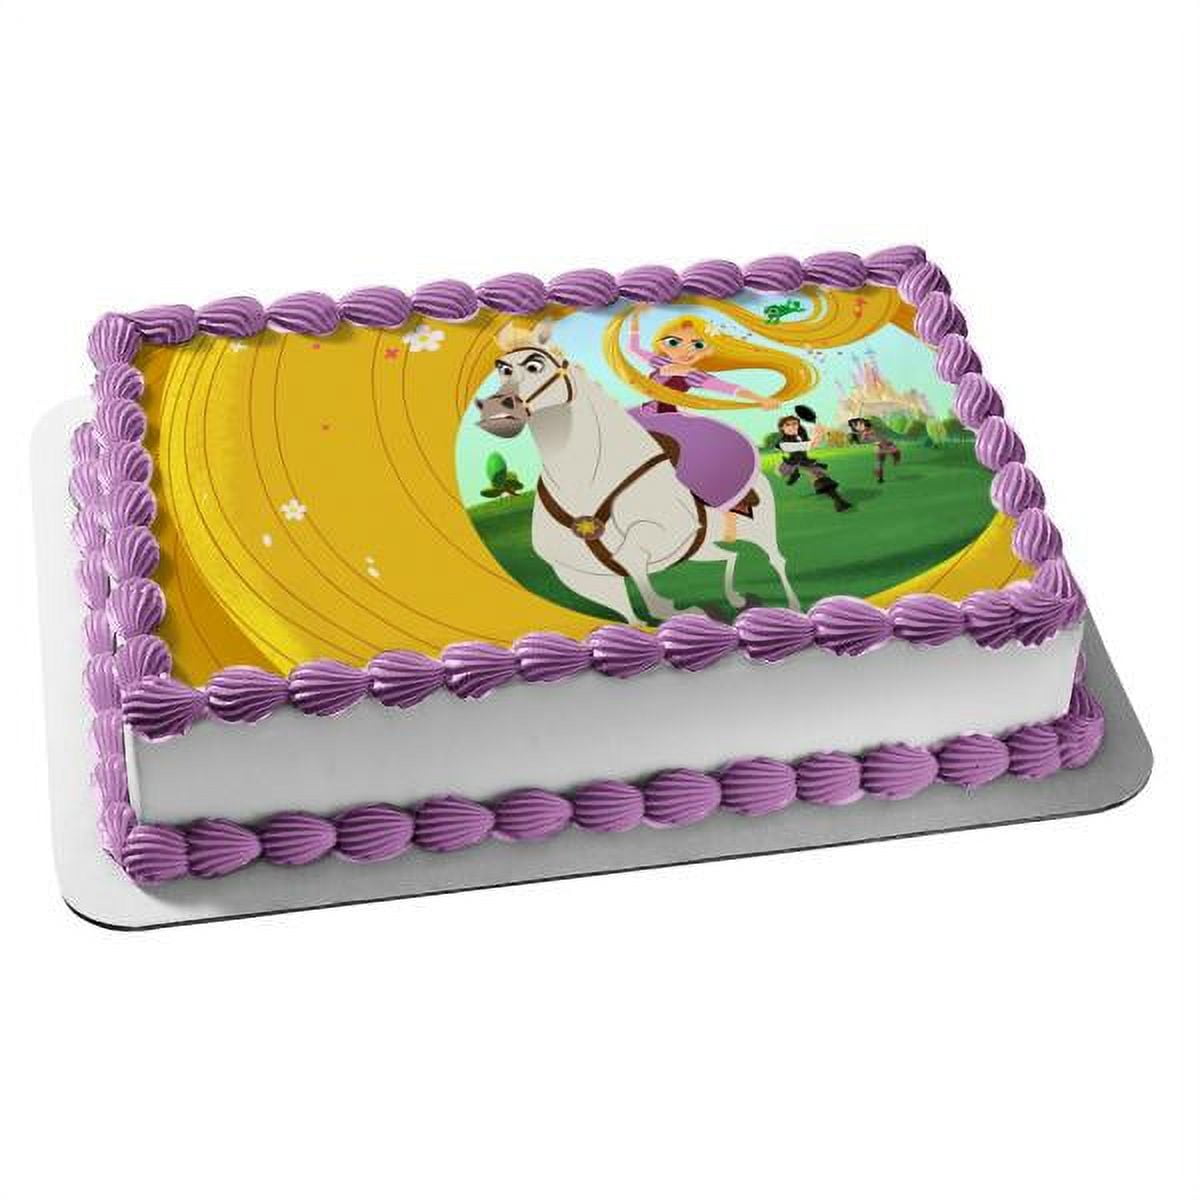 50 Tangled Cake Design (Cake Idea) - October 2019 | Rapunzel birthday cake,  Princess birthday cake, Rapunzel cake